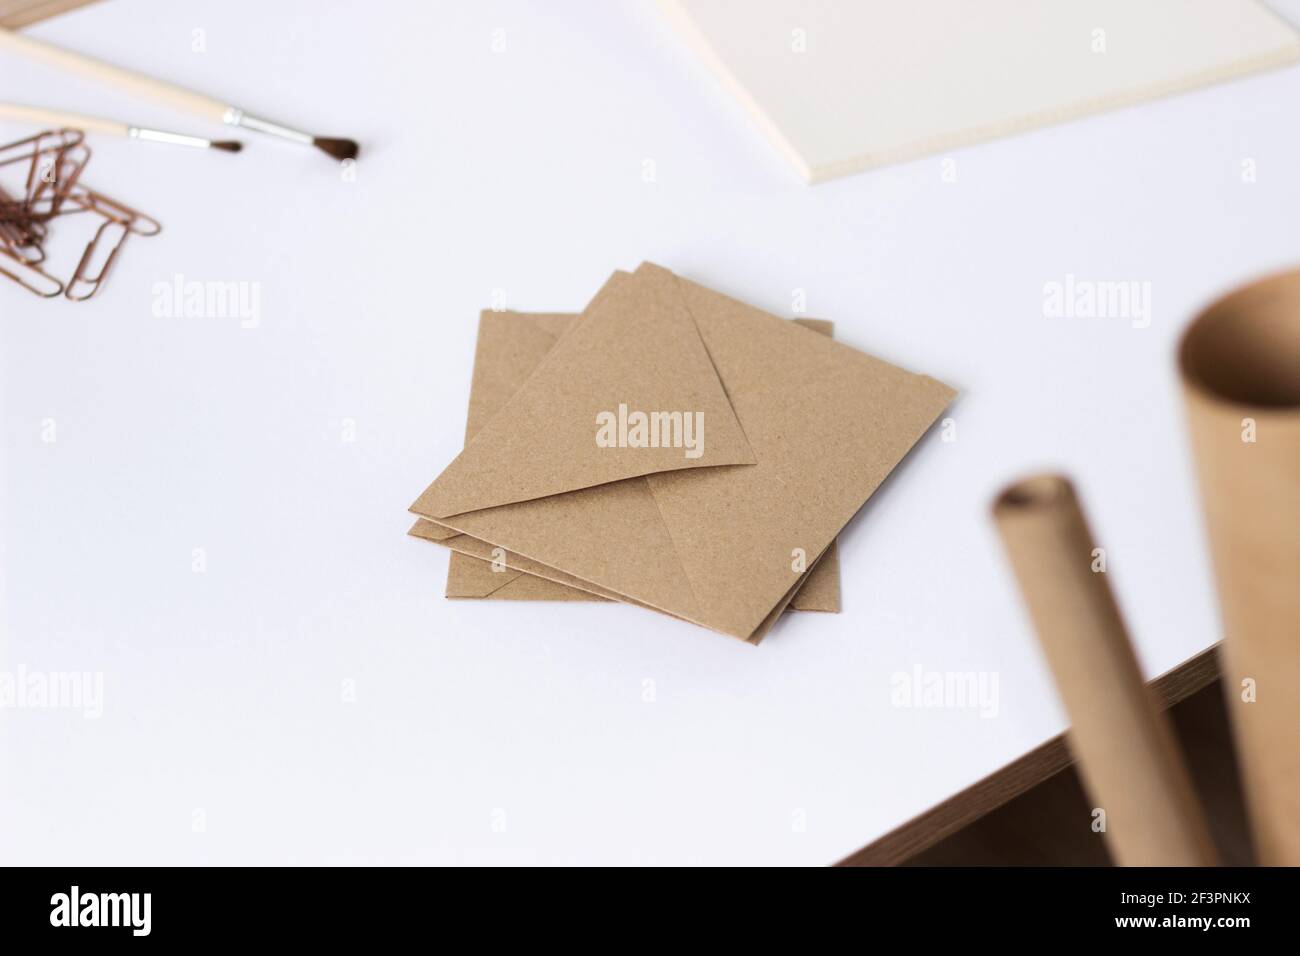 Minimal Design Flatlay with Stationery on White Background. Creative Art Design Mockup. Stock Photo